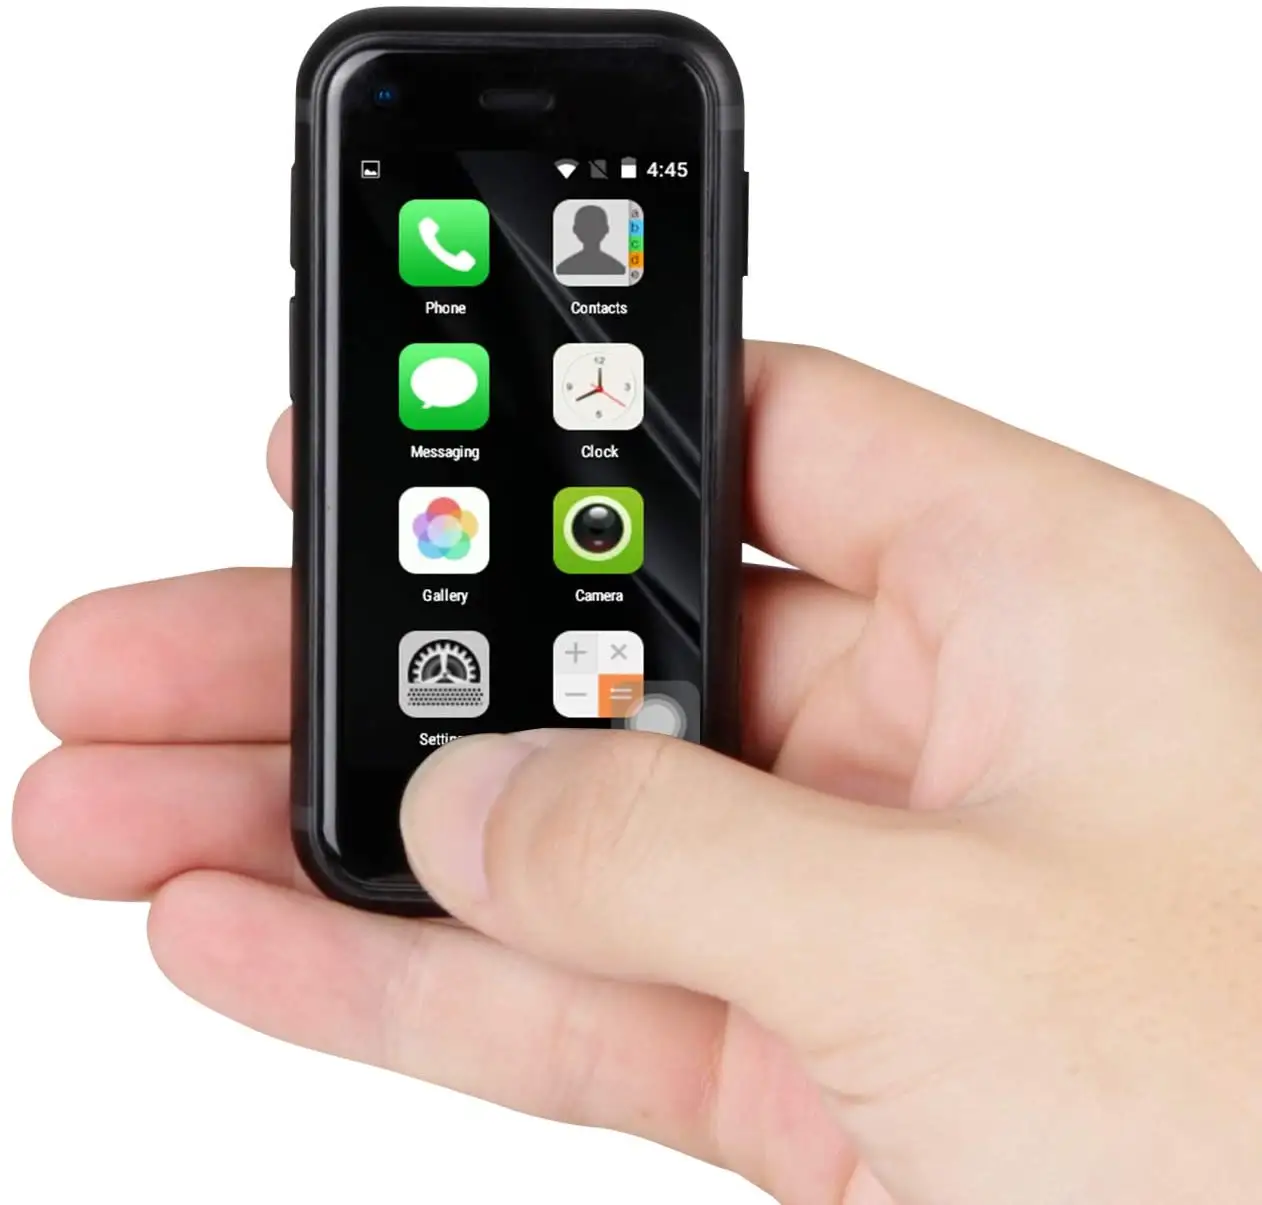 Mini Smartphone çocuk telefonu SOYES XS11 küçük cep telefonu 2.5 inç Android küçük telefon Quad Core 1G + 8G